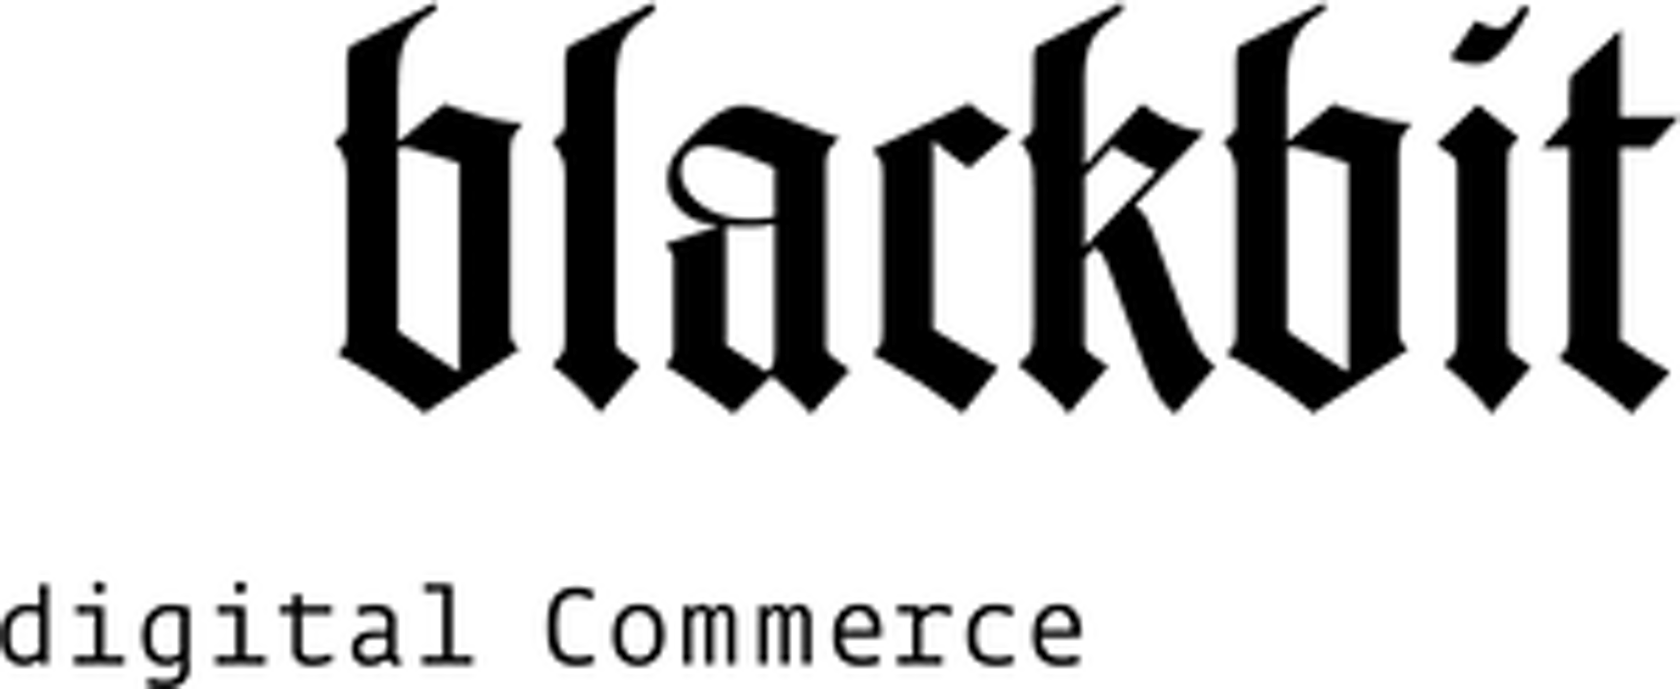 Blackbit digital Commerce GmbH